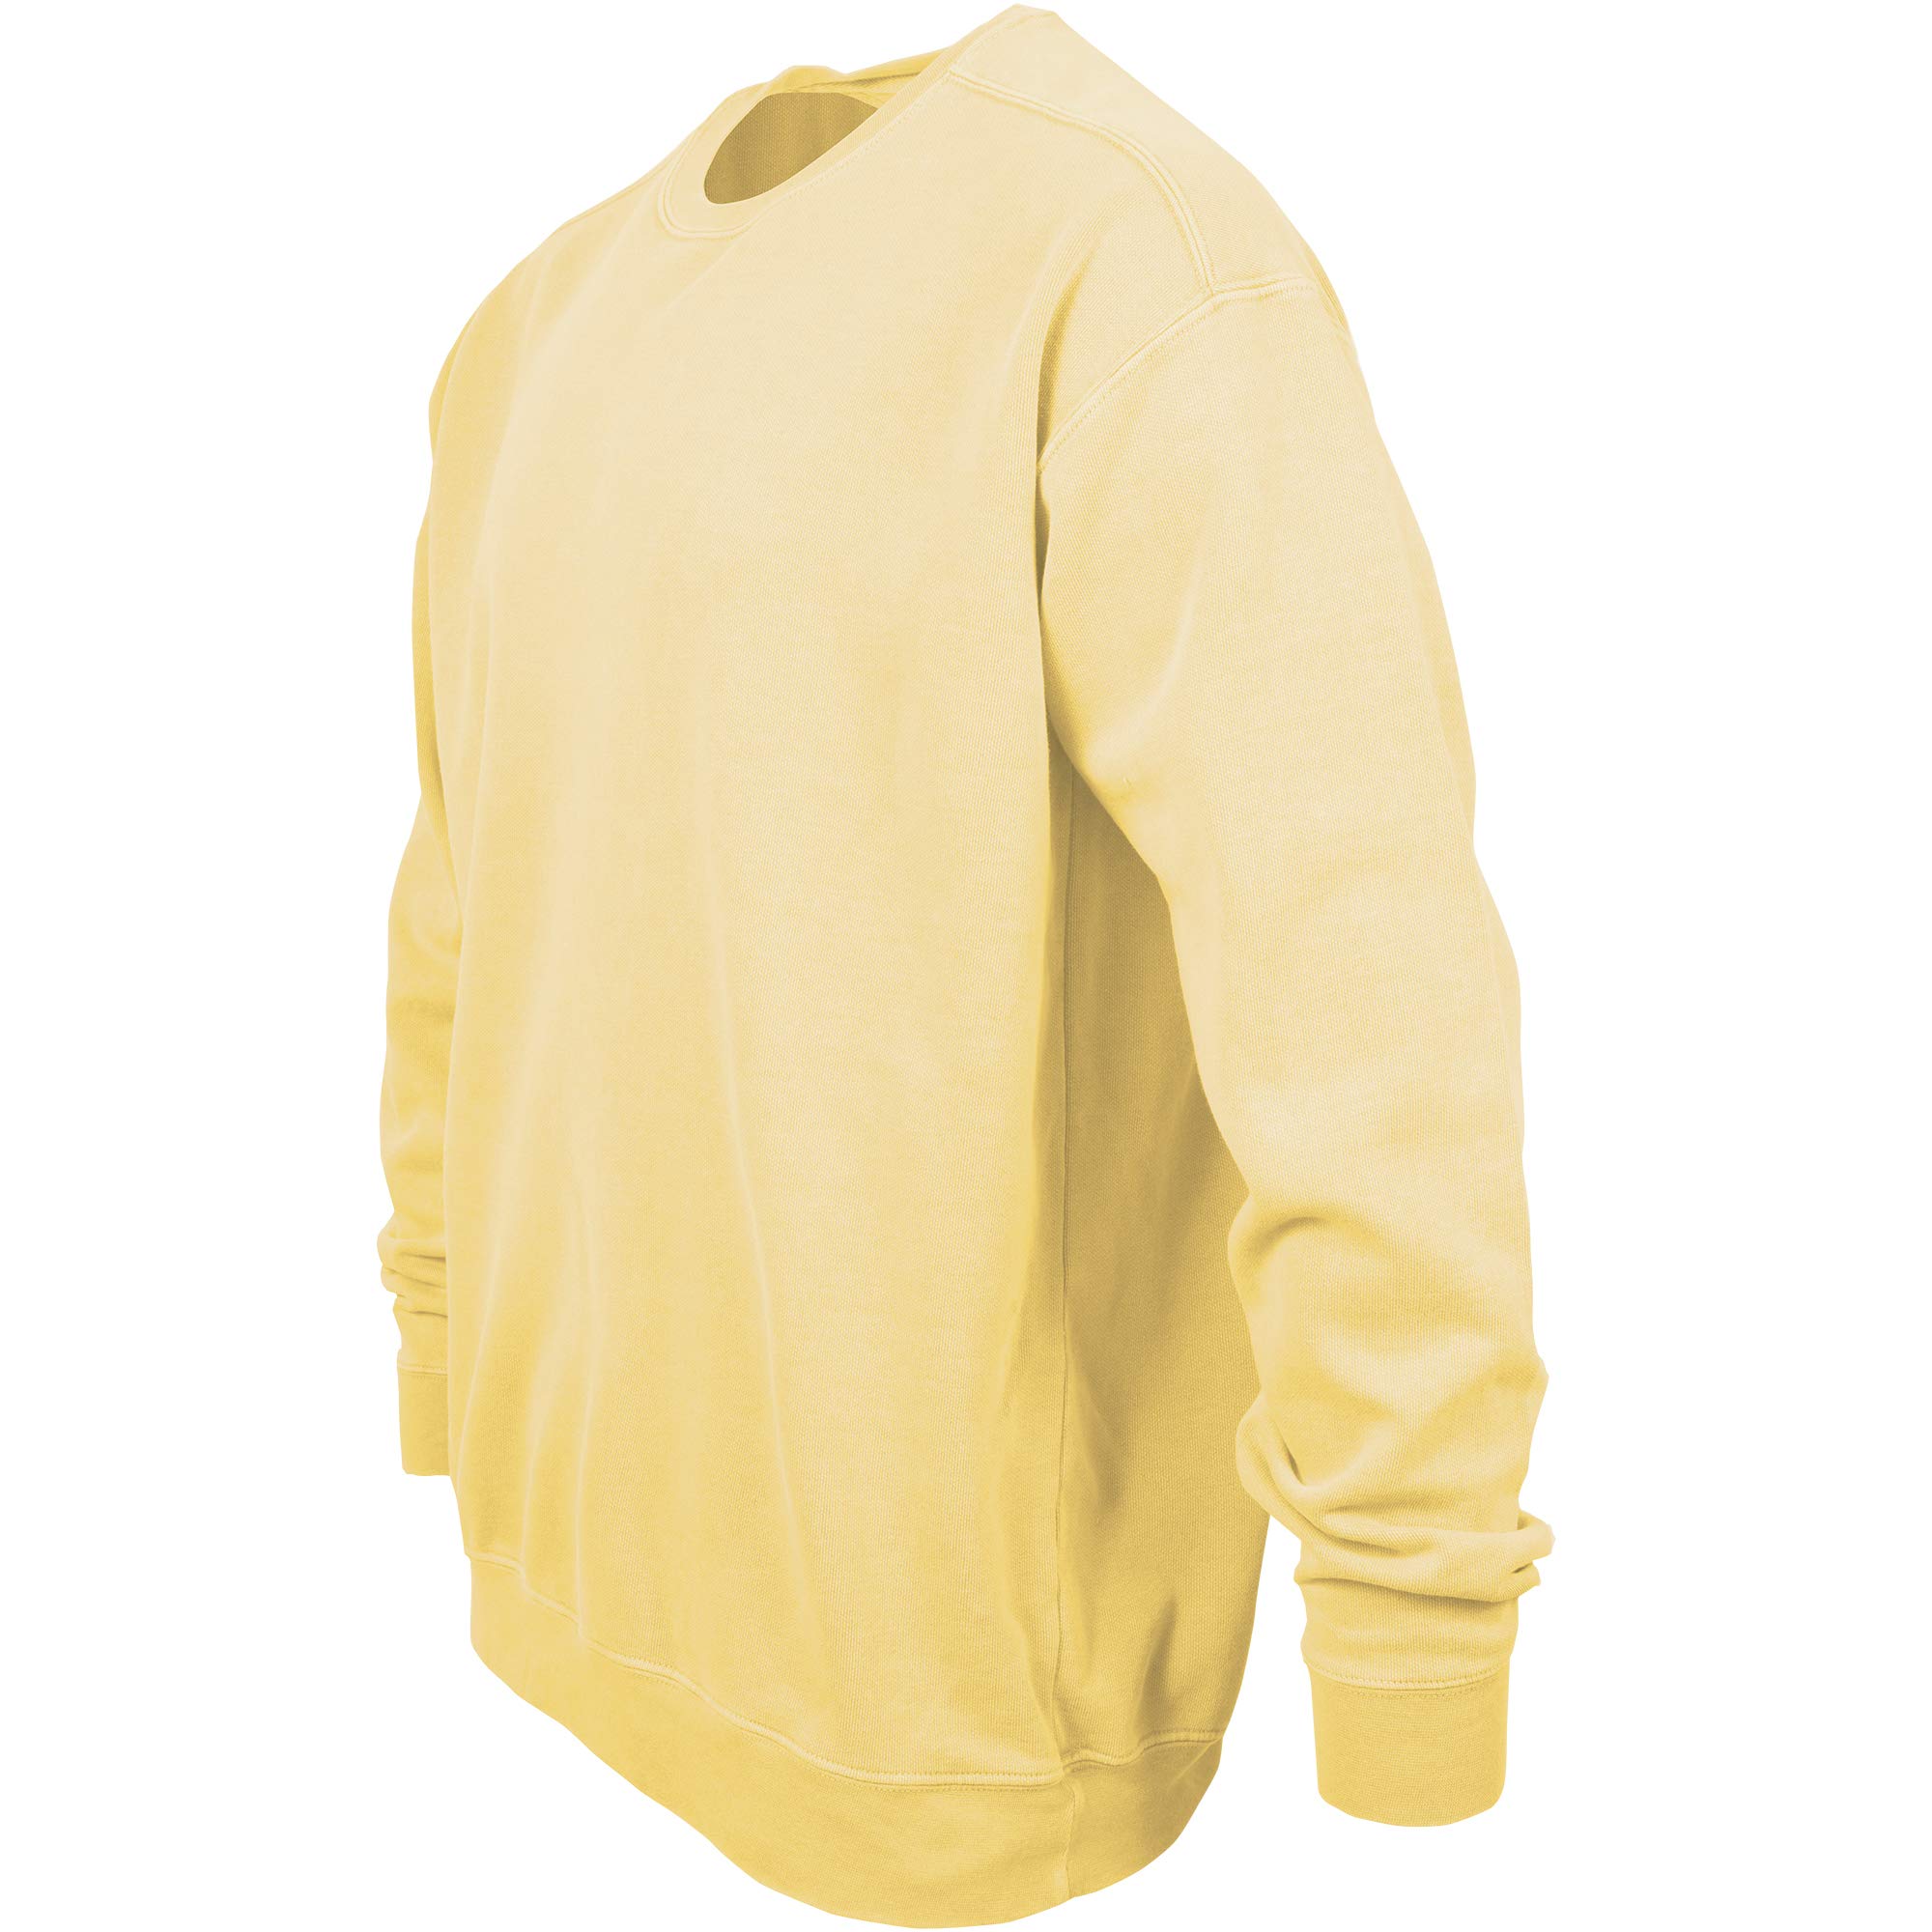 Comfort Colors Adult Crewneck Sweatshirt, Style 1566